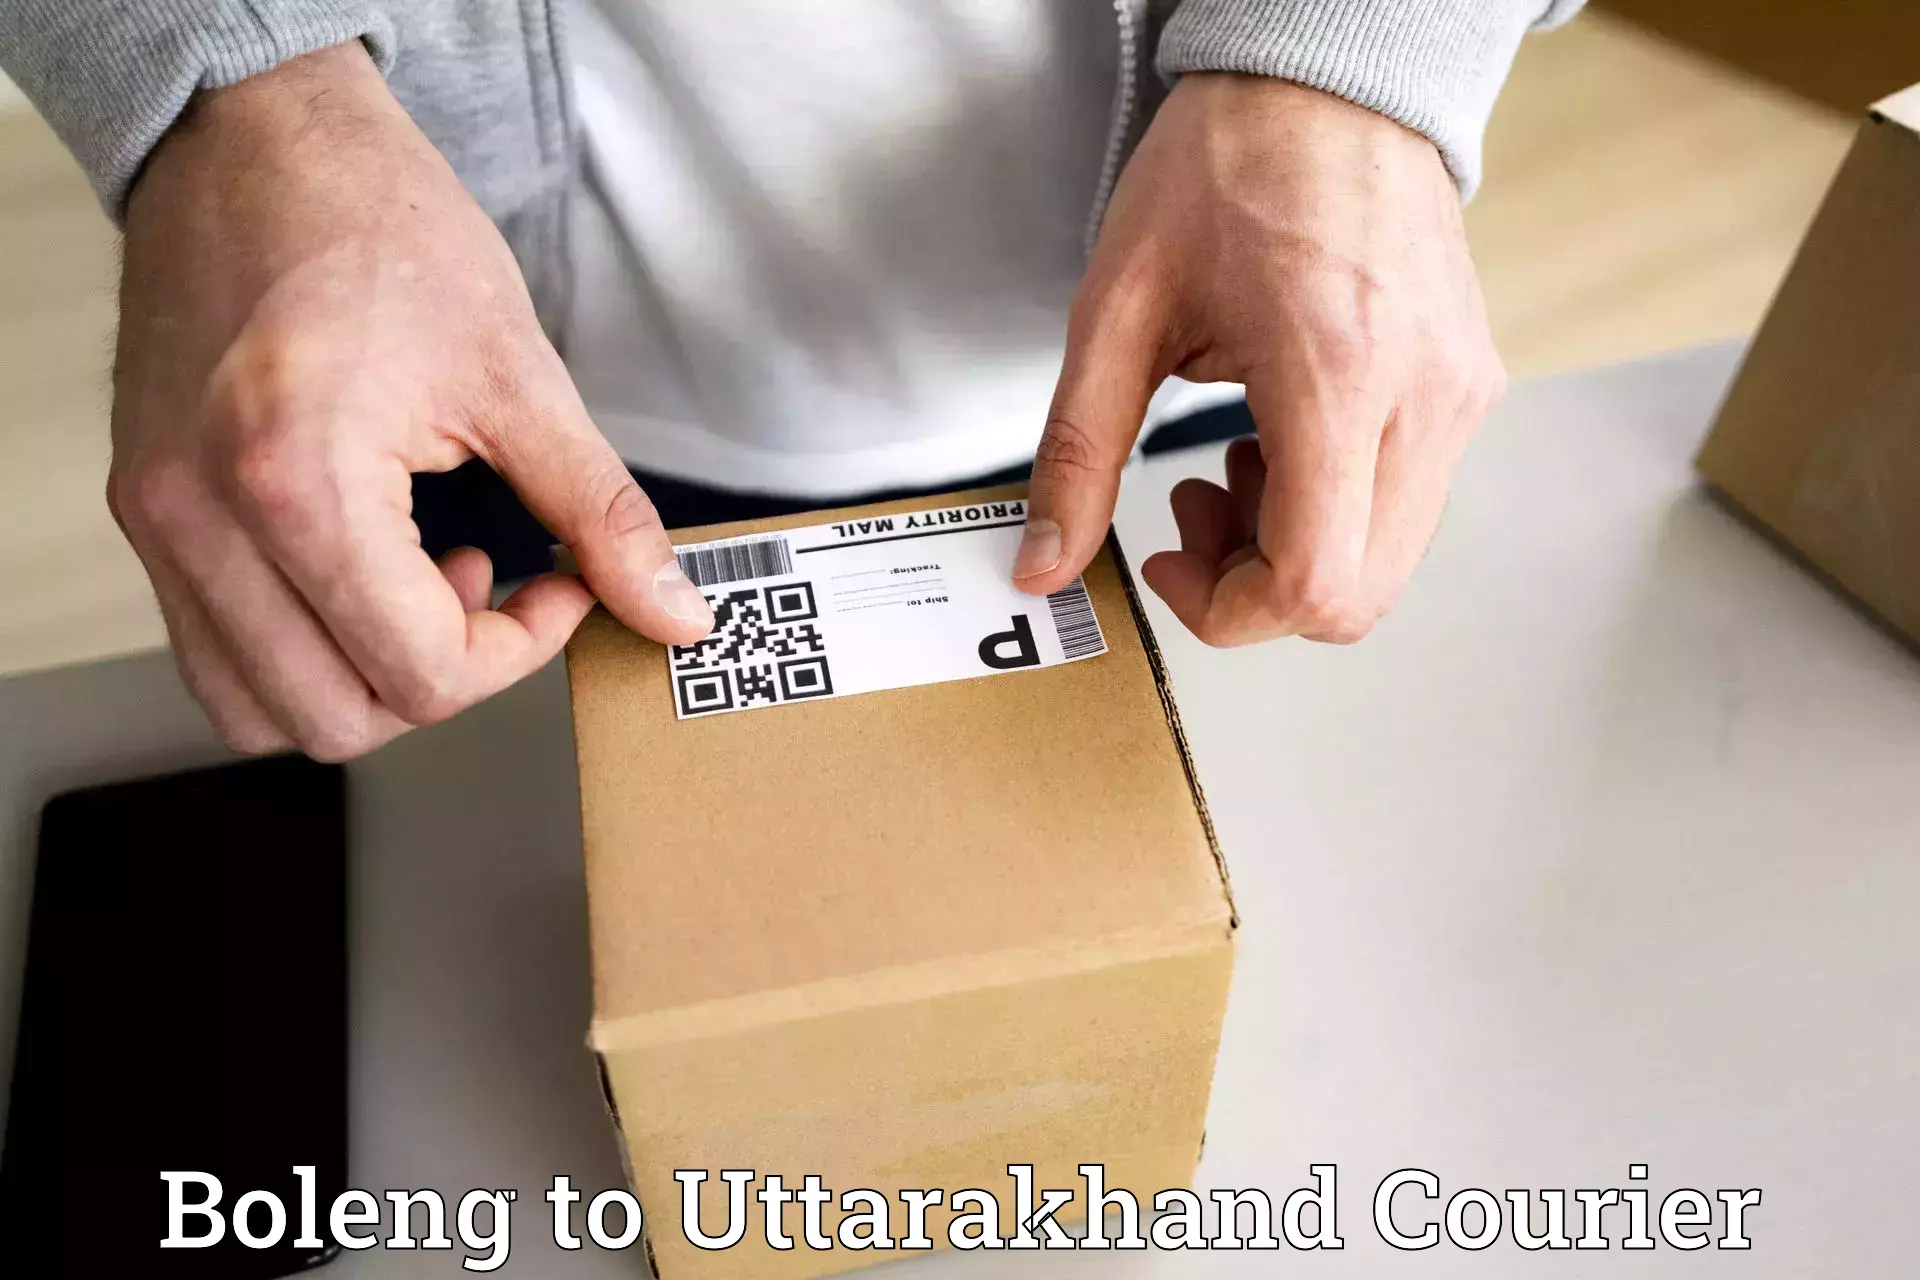 Courier service comparison Boleng to Uttarakhand